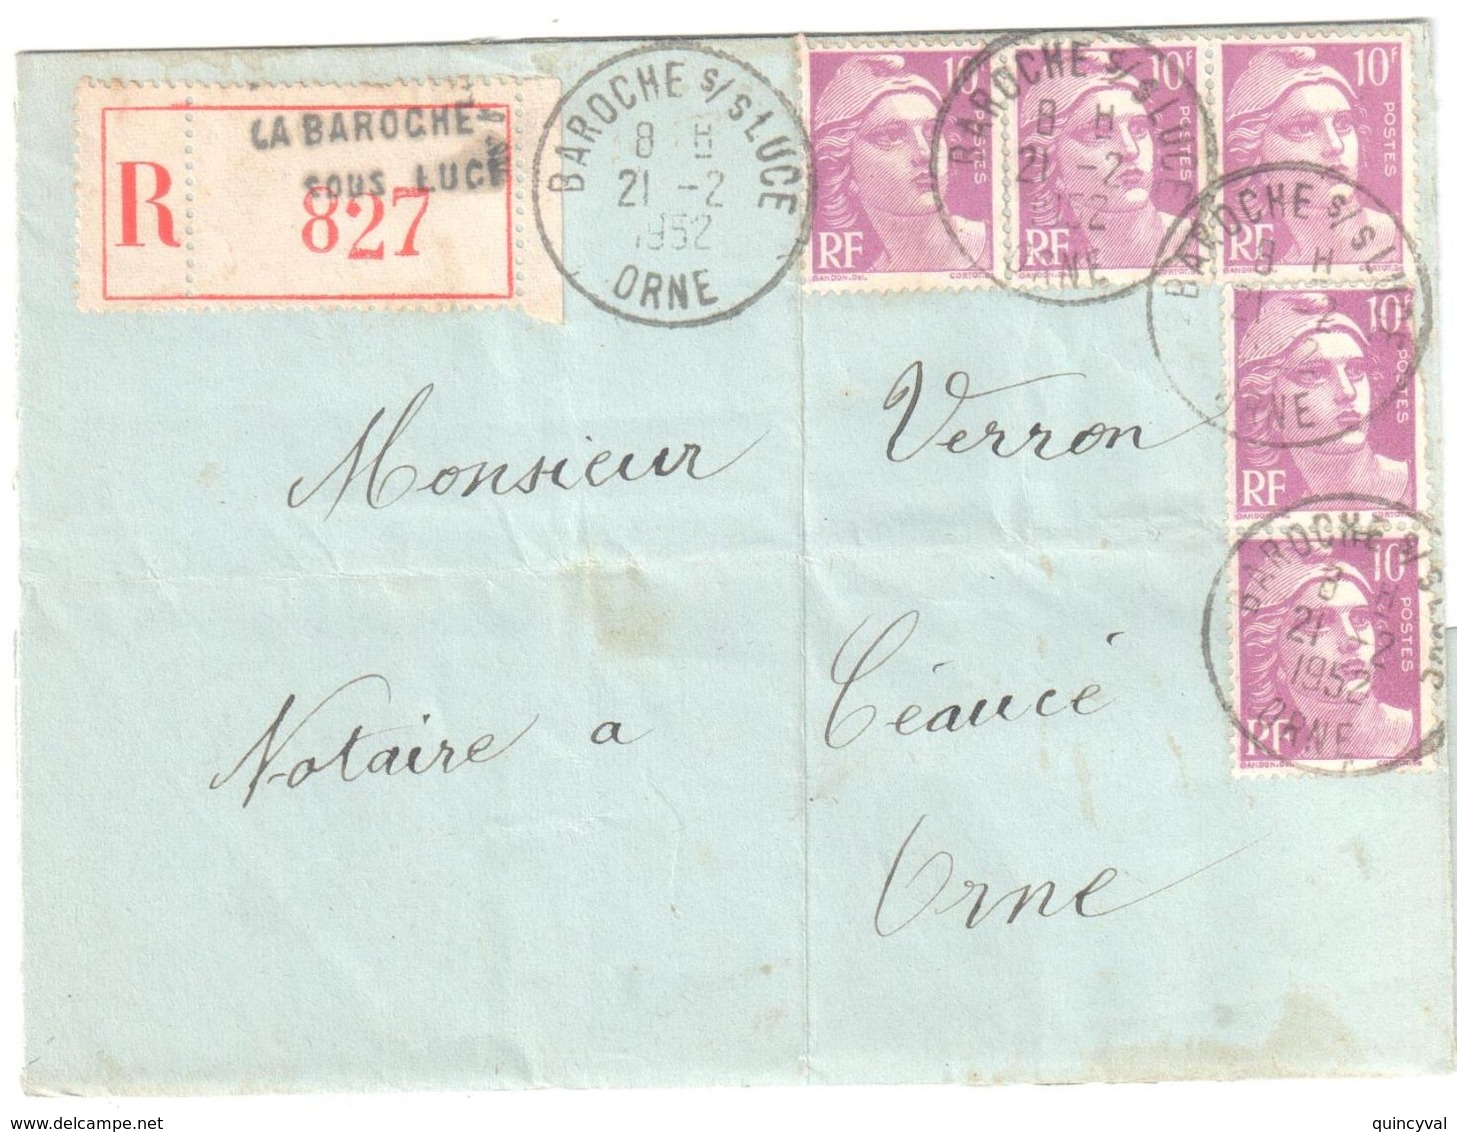 BAROCHE Sous LUCE (LA) Orne Lettre Recommandée 10 F Gandon Lilas Yv 811 Ob 21 2 1952 - Covers & Documents